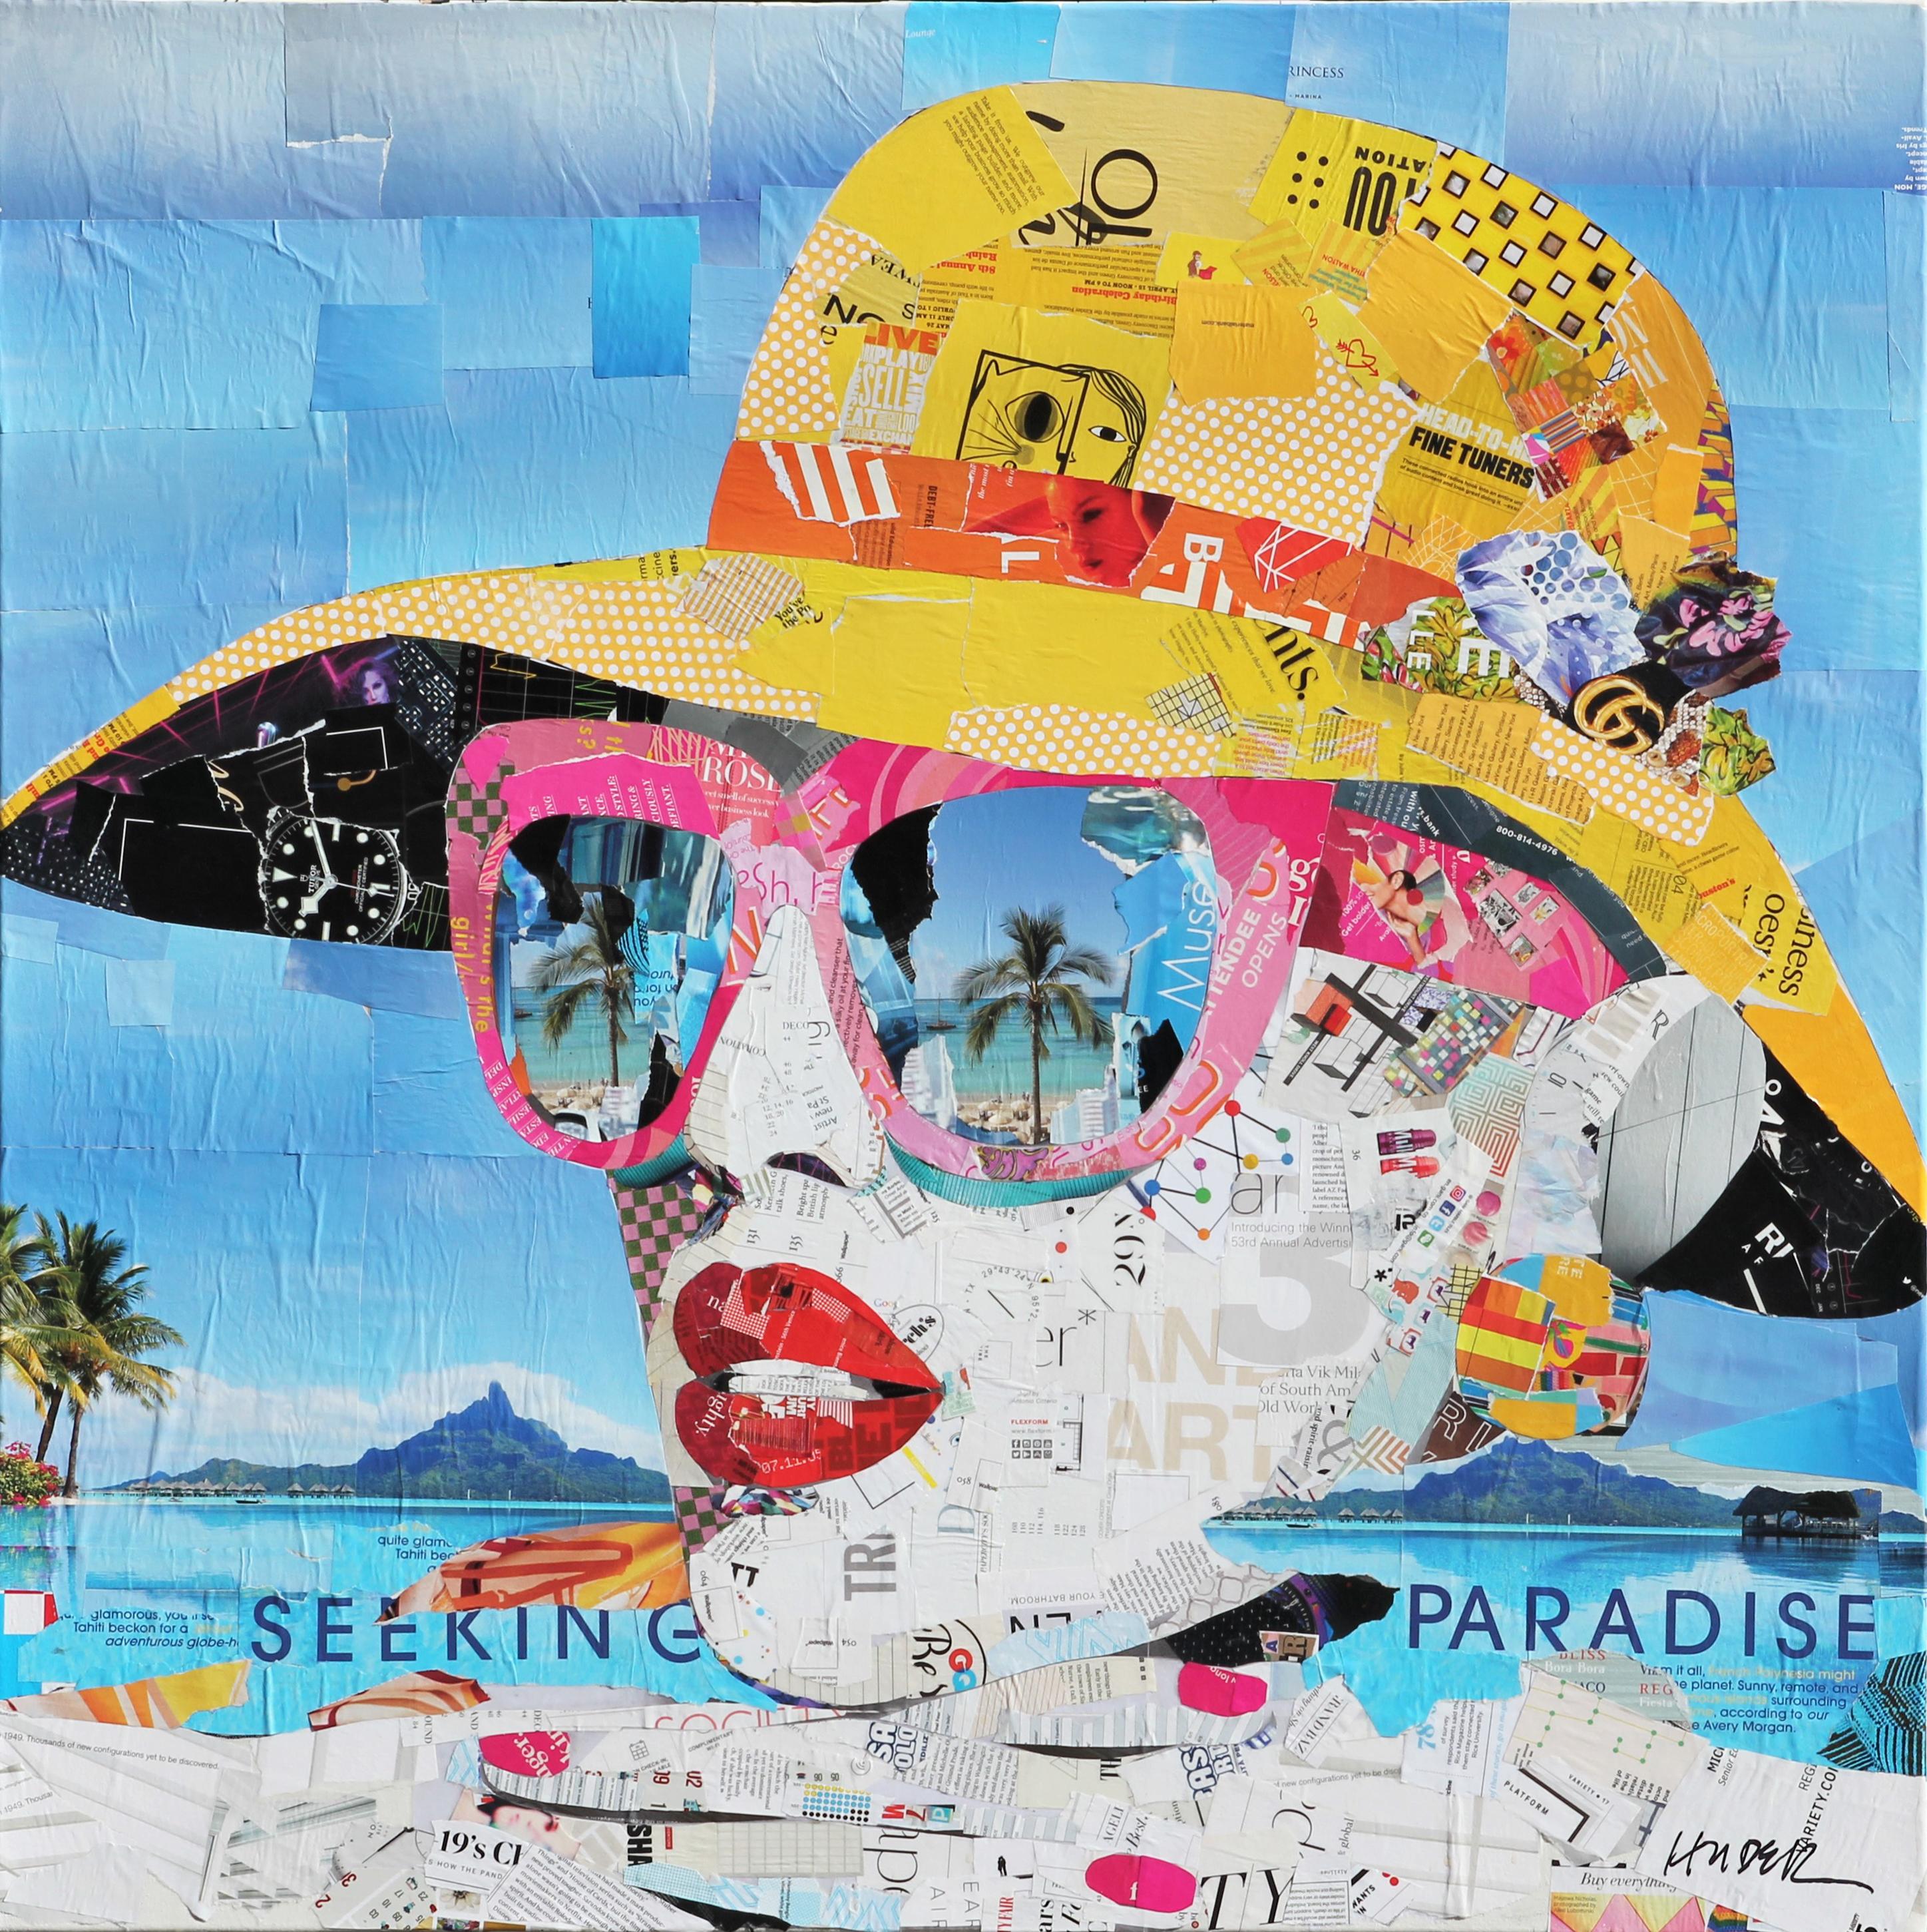 "Seeking Paradise" Tropical Vacation Mixed Media Pop Art Assemblage Collage - Mixed Media Art by Jim Hudek